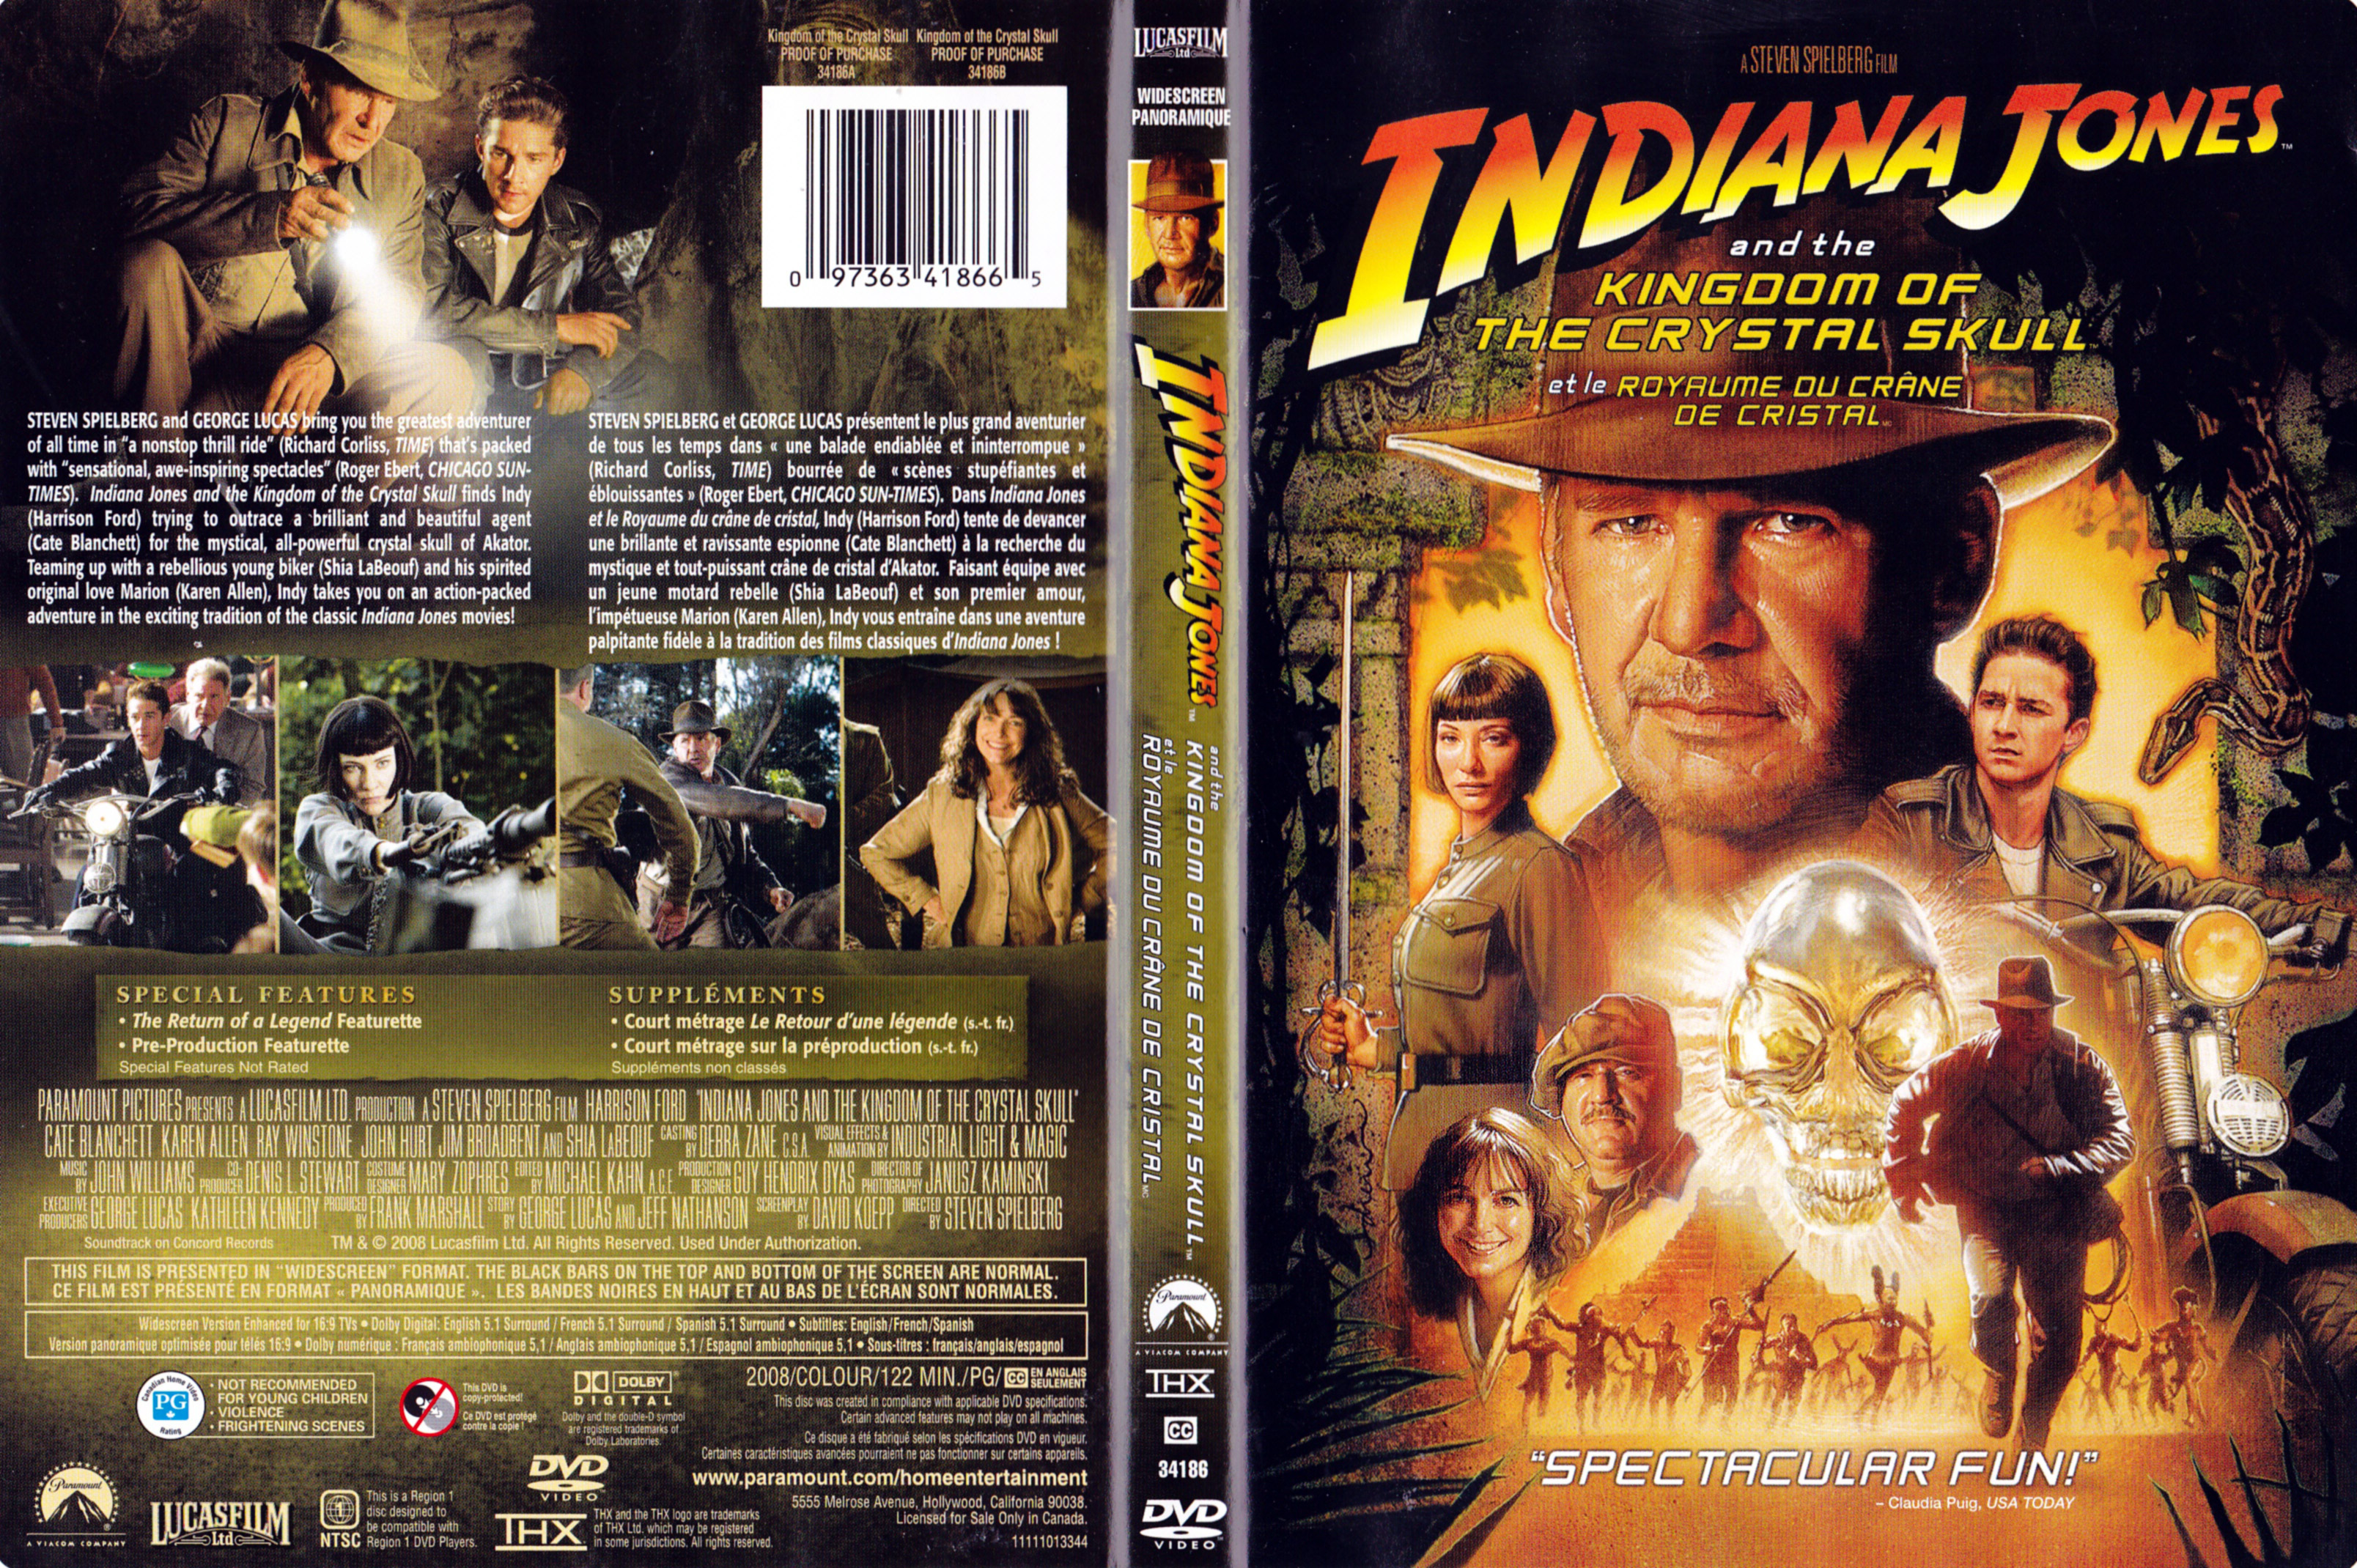 Jaquette DVD Indiana Jones Kingoom of the crystal skull - Indiana Jones Et le crane de cristal (Canadienne)